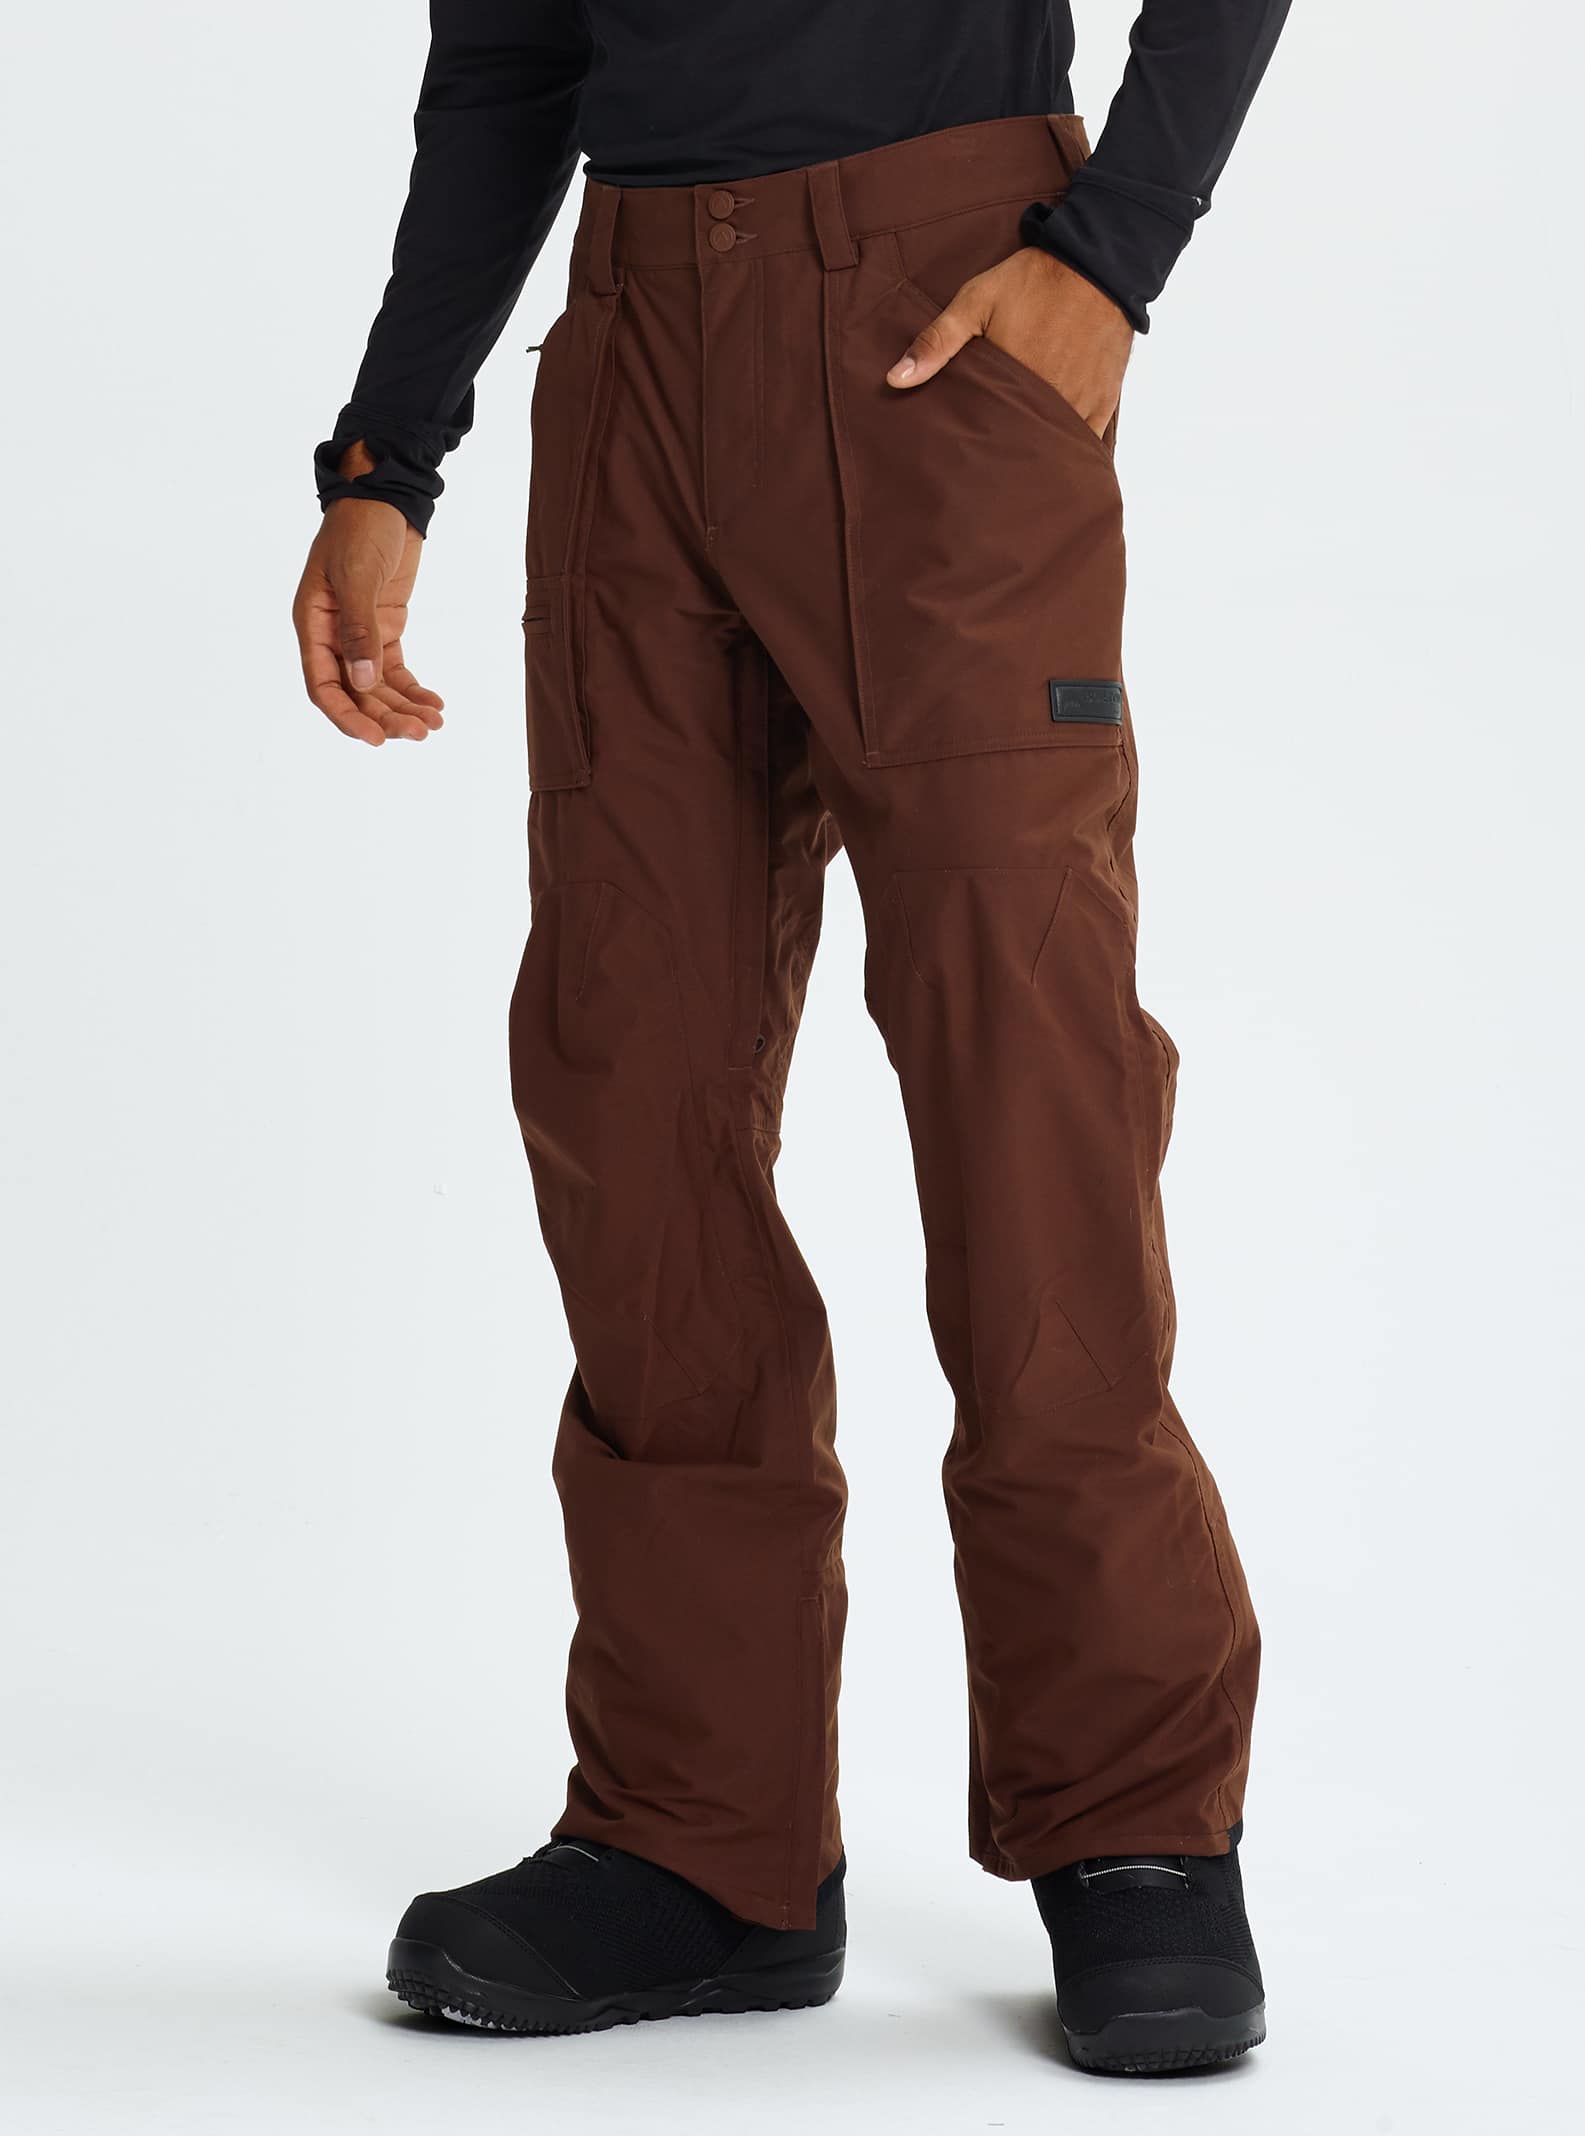 Men's Burton Southside Pant - Regular Fit | Burton.com Winter 2019 US